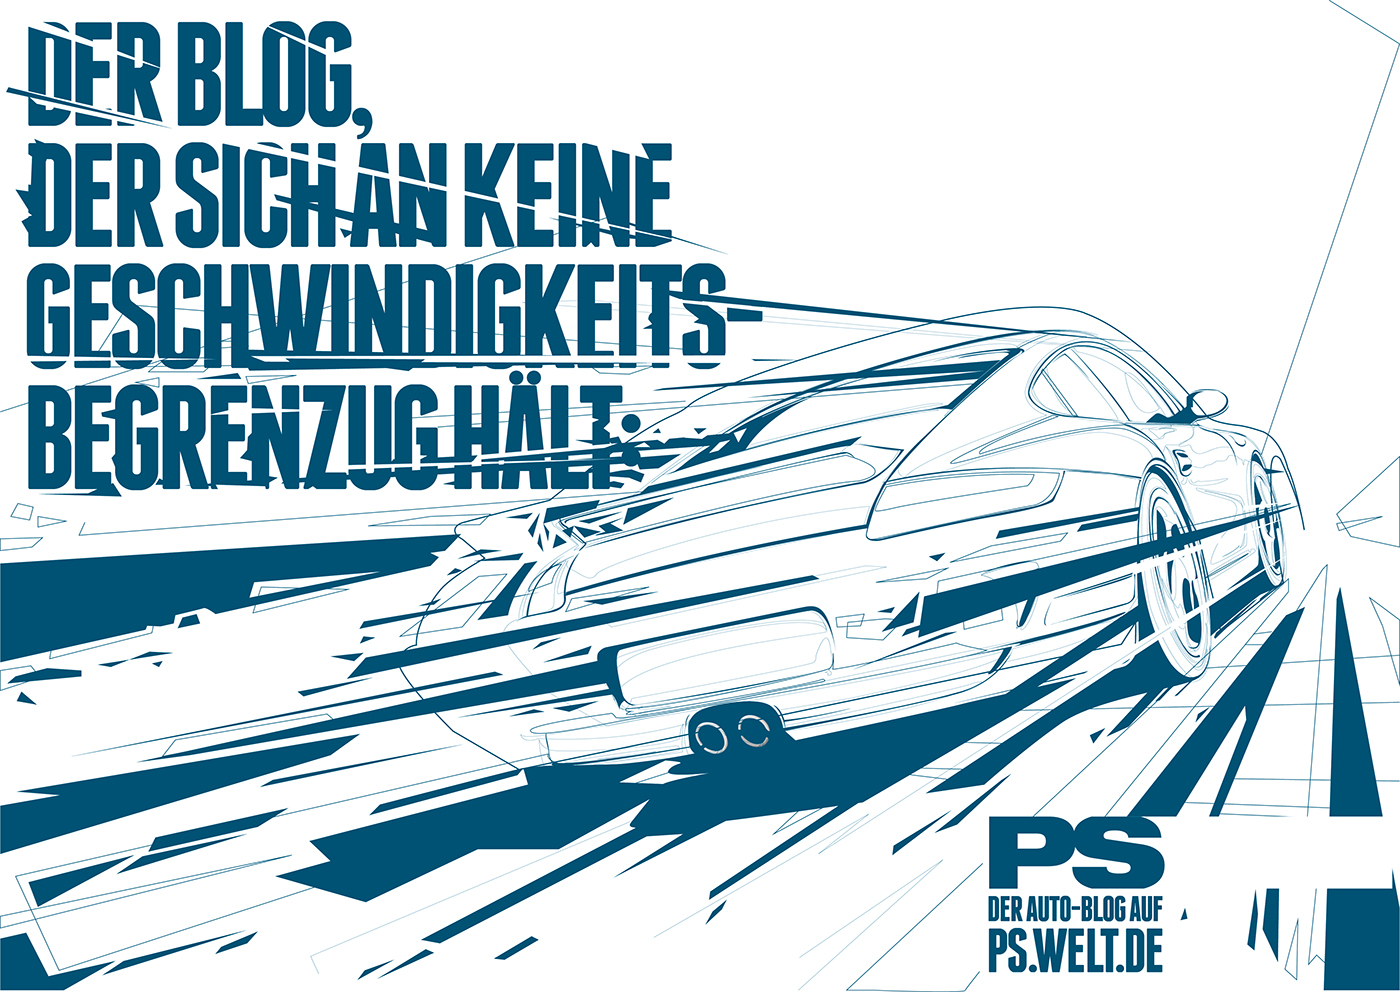 Dynamic car motion vector graphic art BMW Porsche FERRARI Sportscar advertisement campaign speed explosion colorful